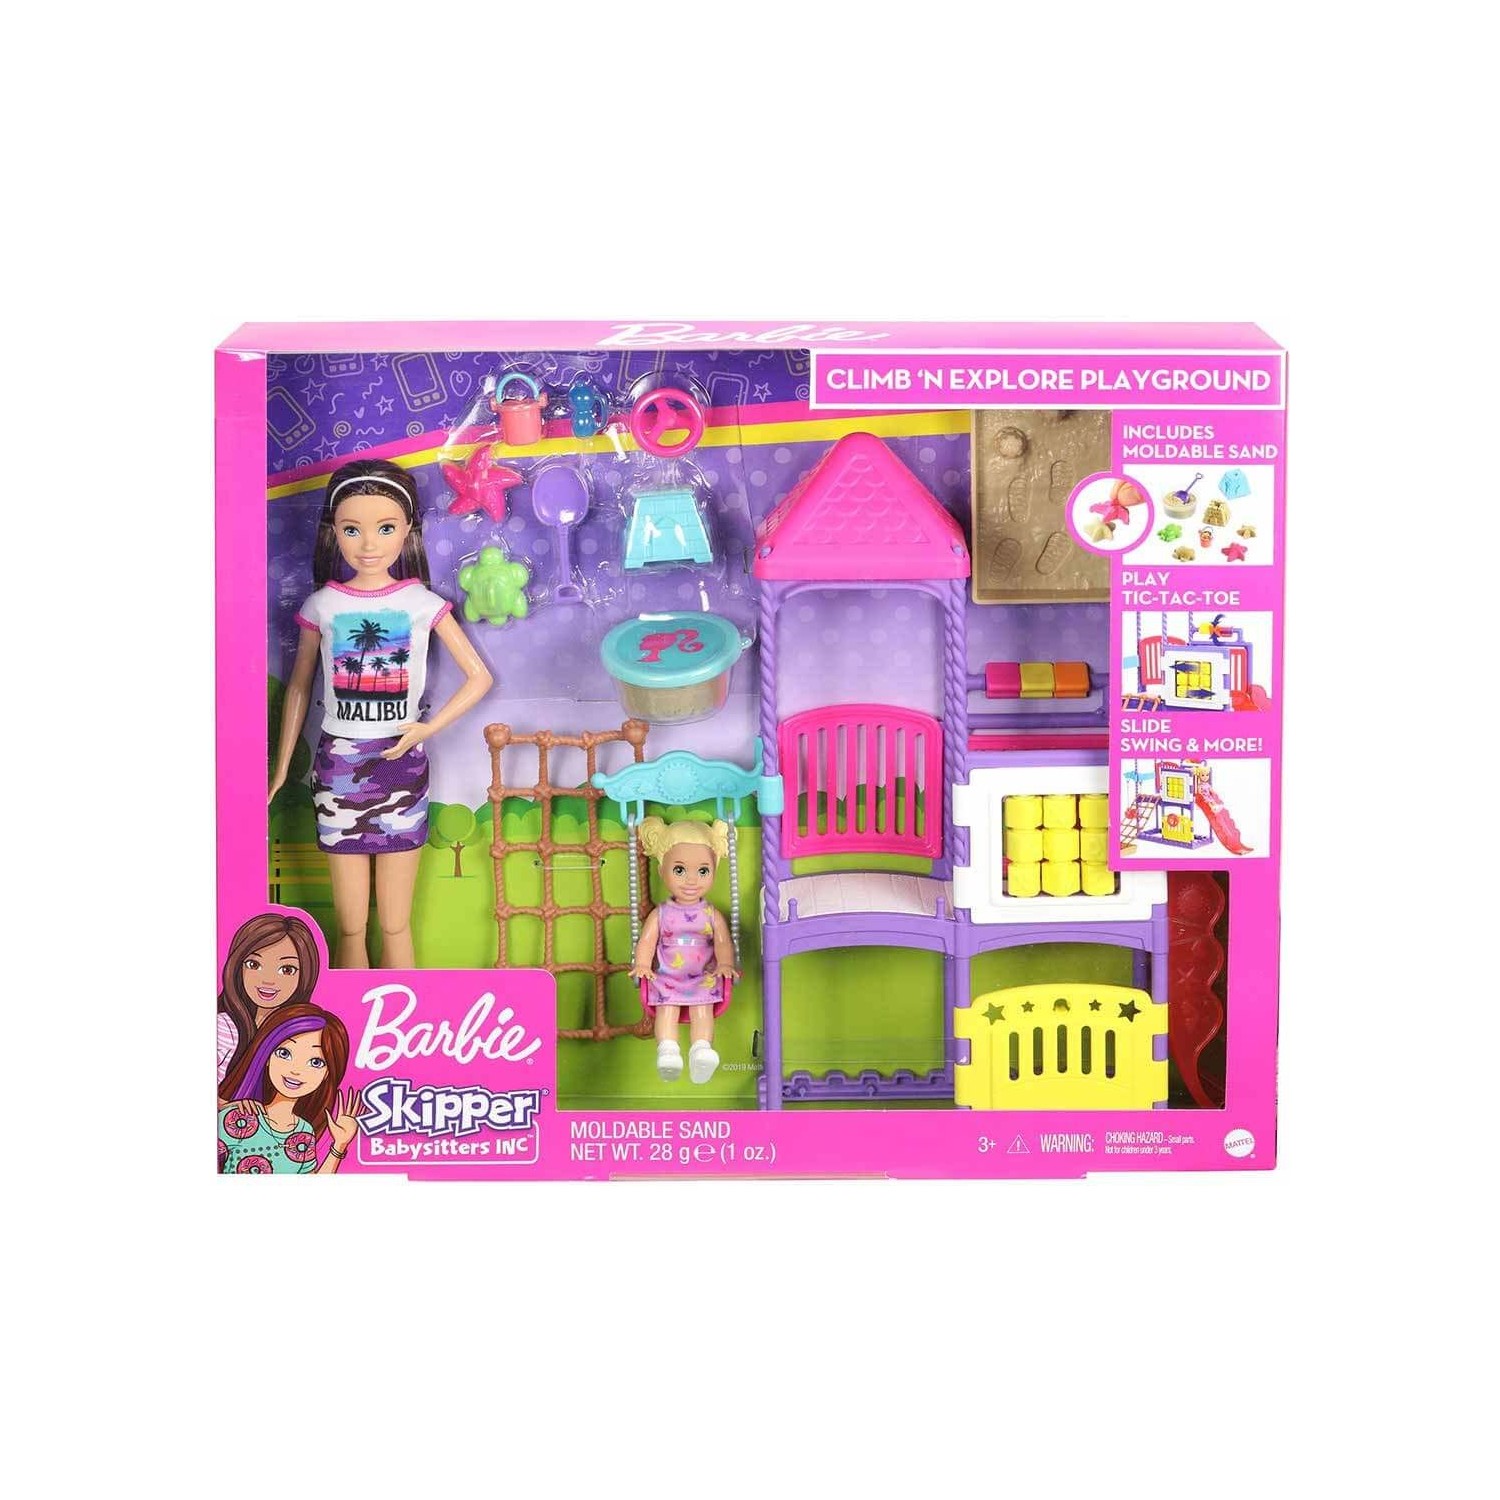 Игровой набор Barbie Skipper Babysitters игровой набор barbie skipper babysitters